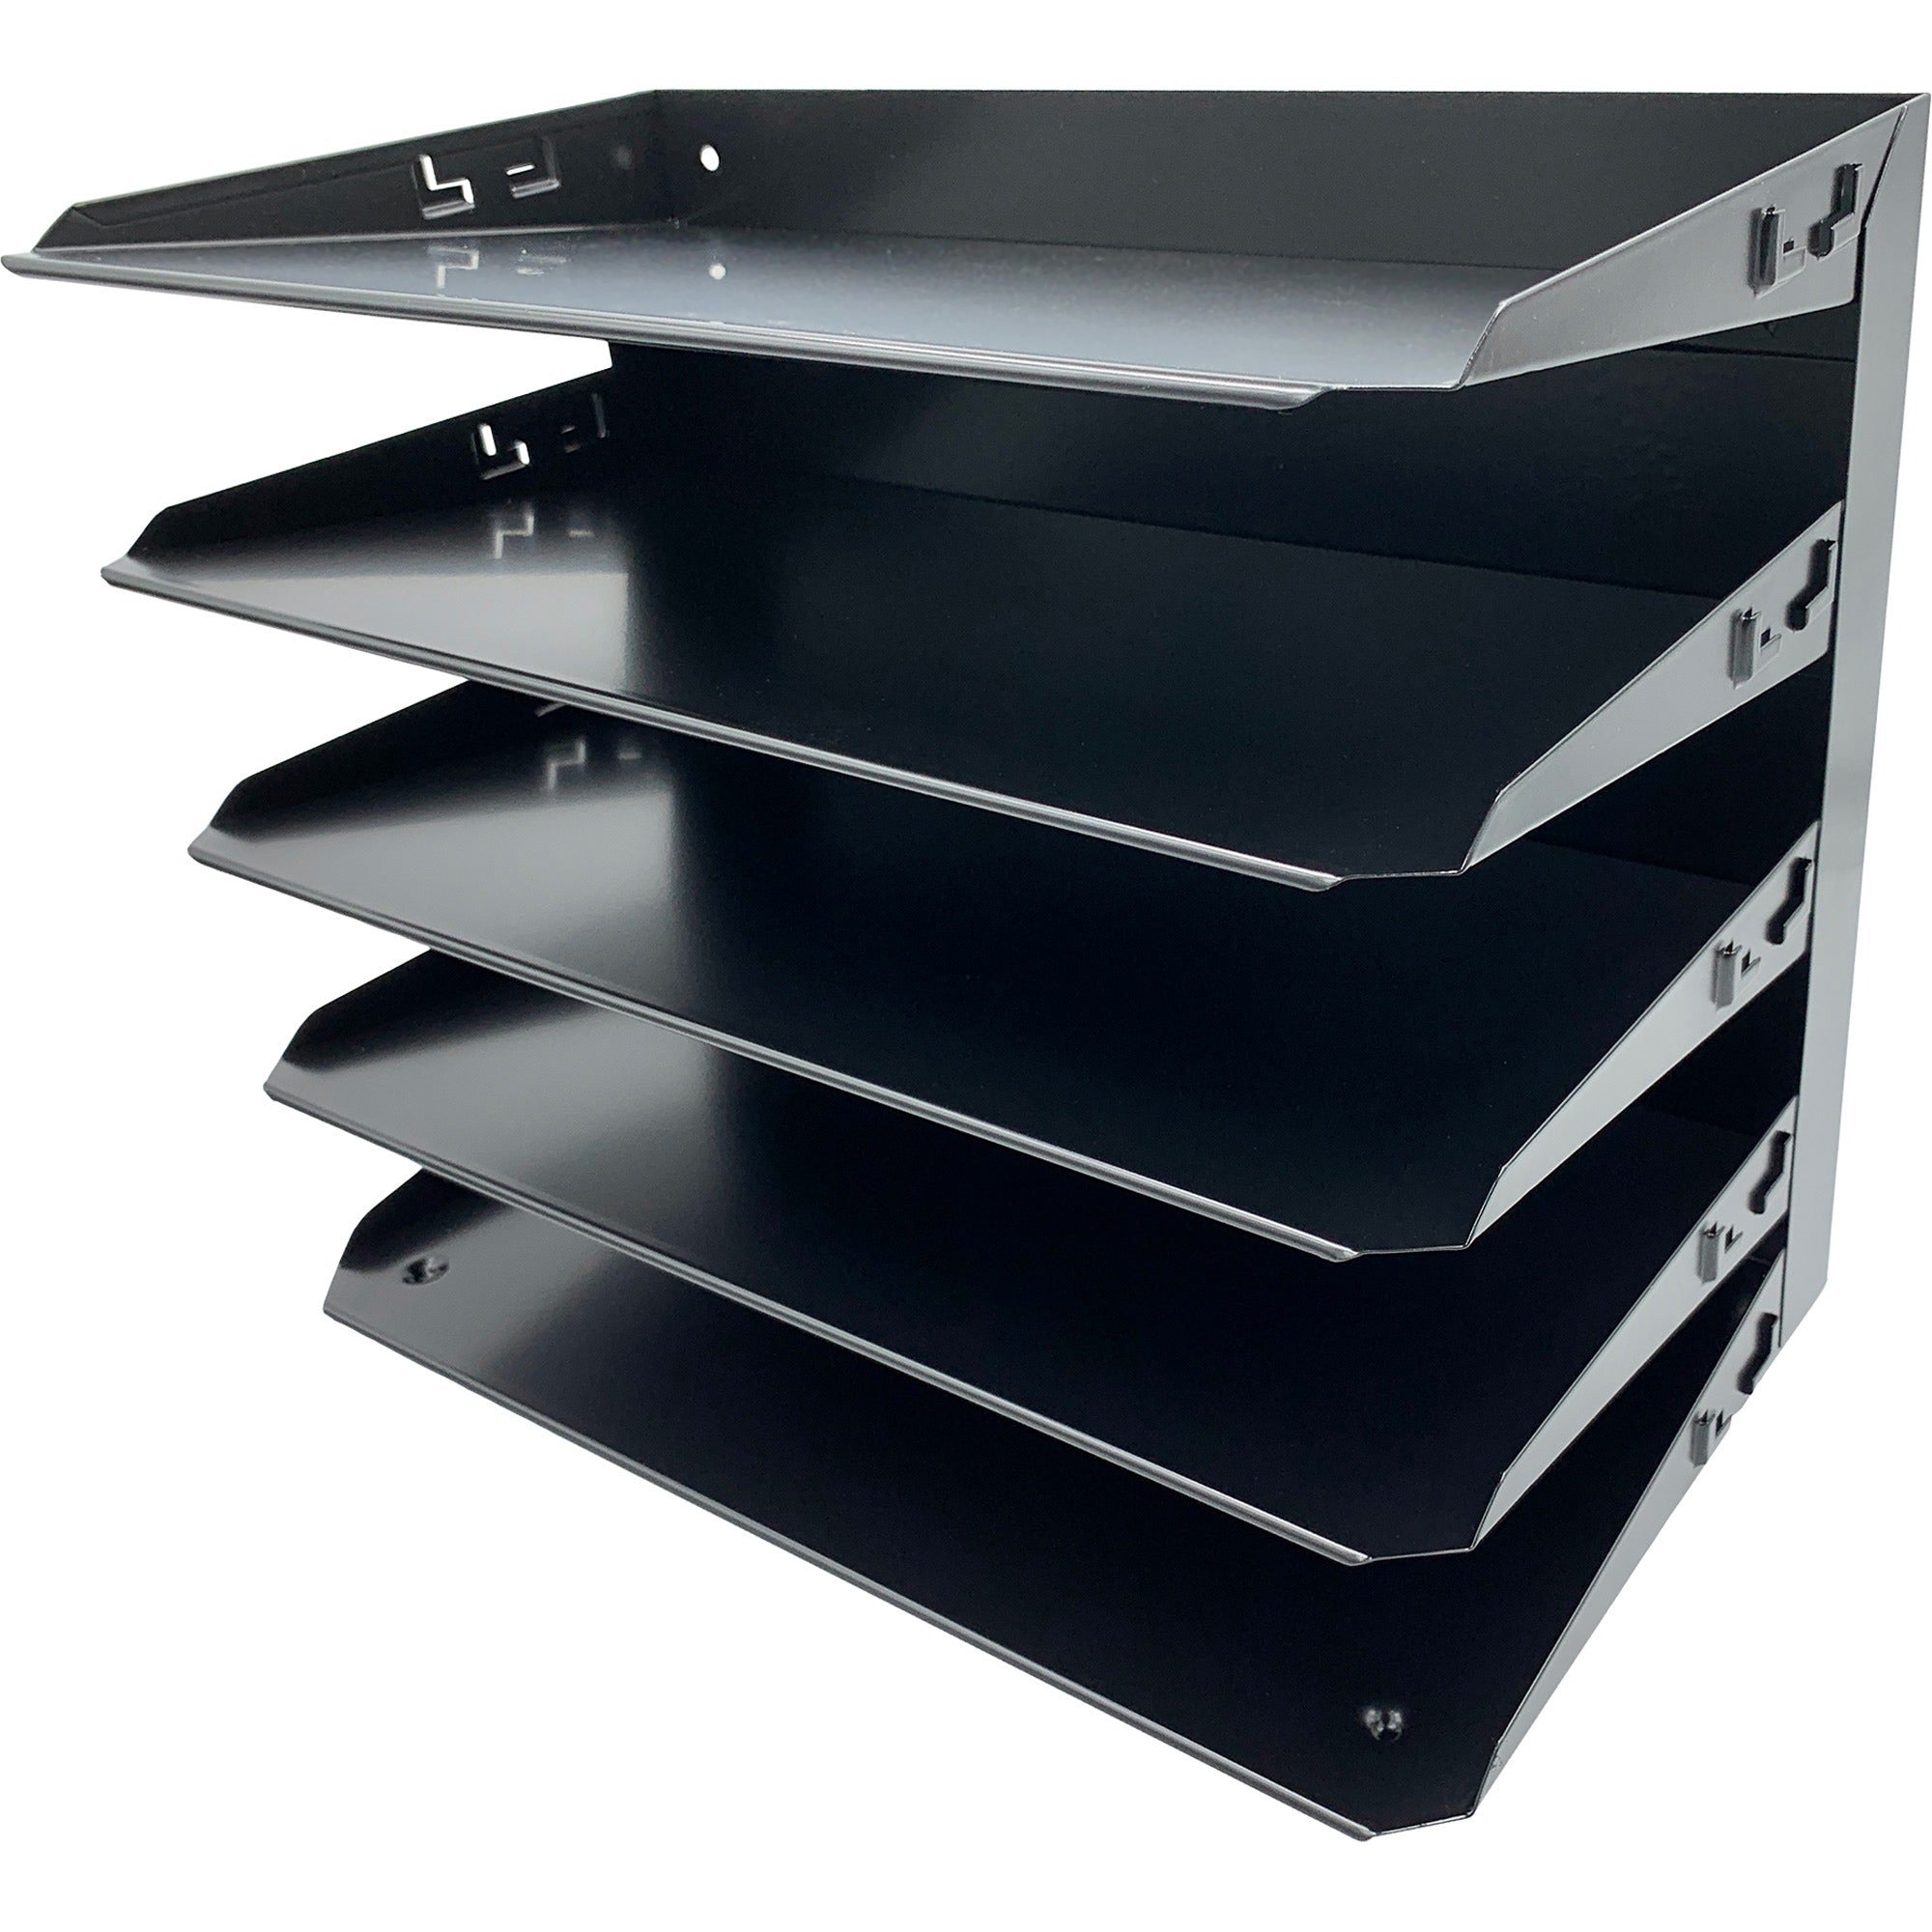 huron-horizontal-slots-desk-organizer-5-compartments-horizontal-15-height-x-15-width-x-88-depth-durable-label-holder-black-steel-1-each_hurhasz0161 - 1